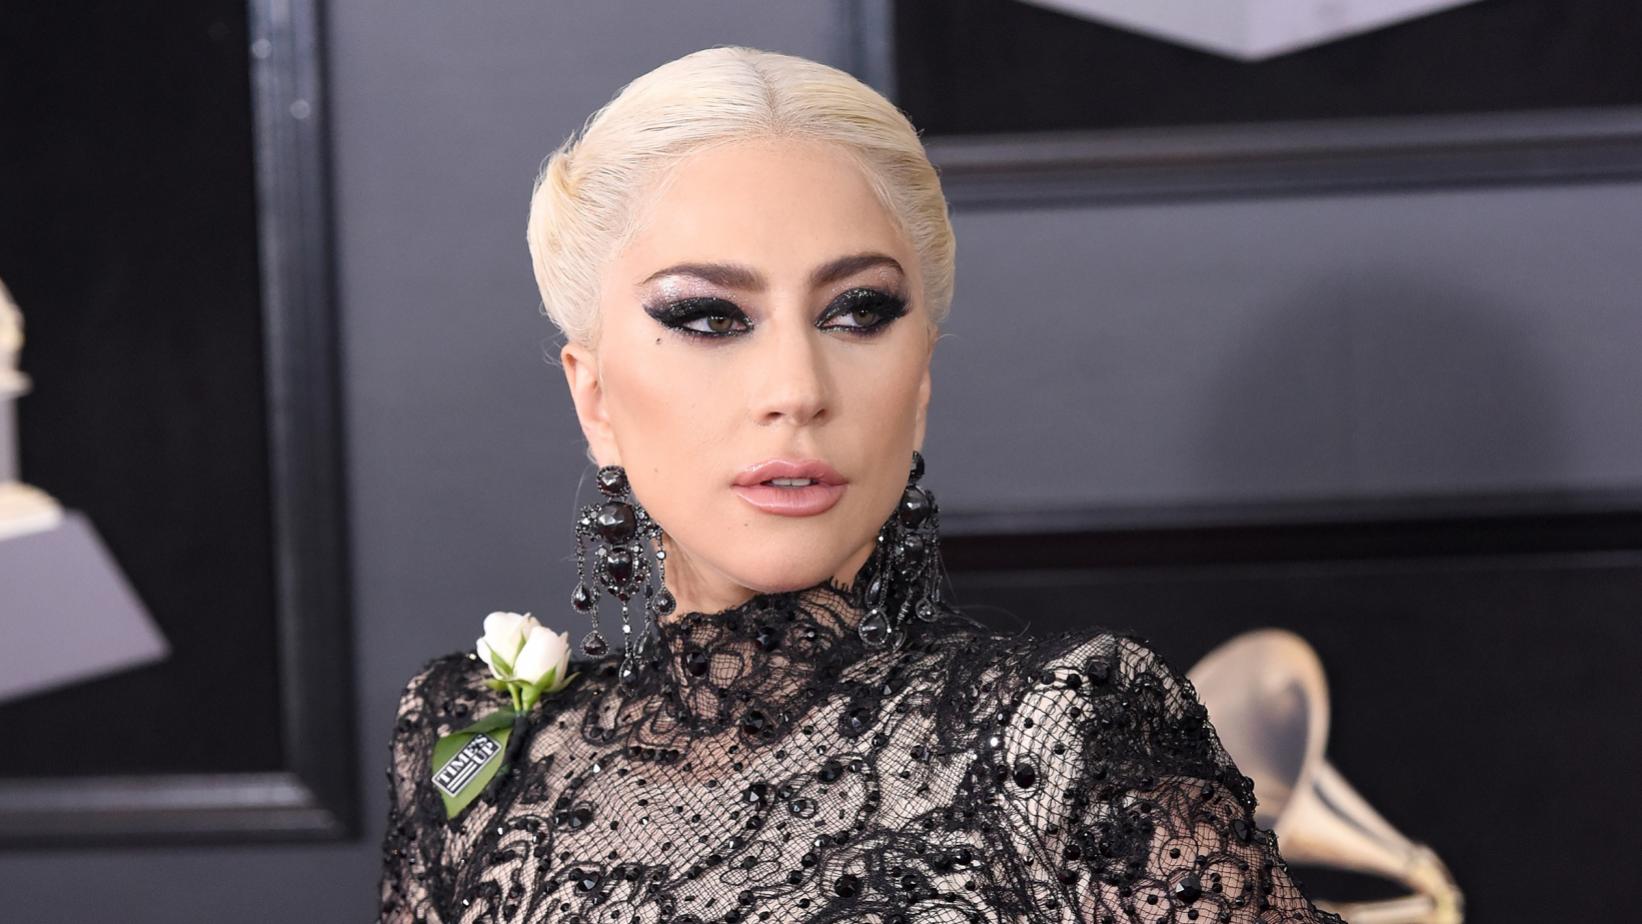 Lady Gaga impulsa histórico festival virtual que incluye a leyendas como Paul McCartney y Elton John